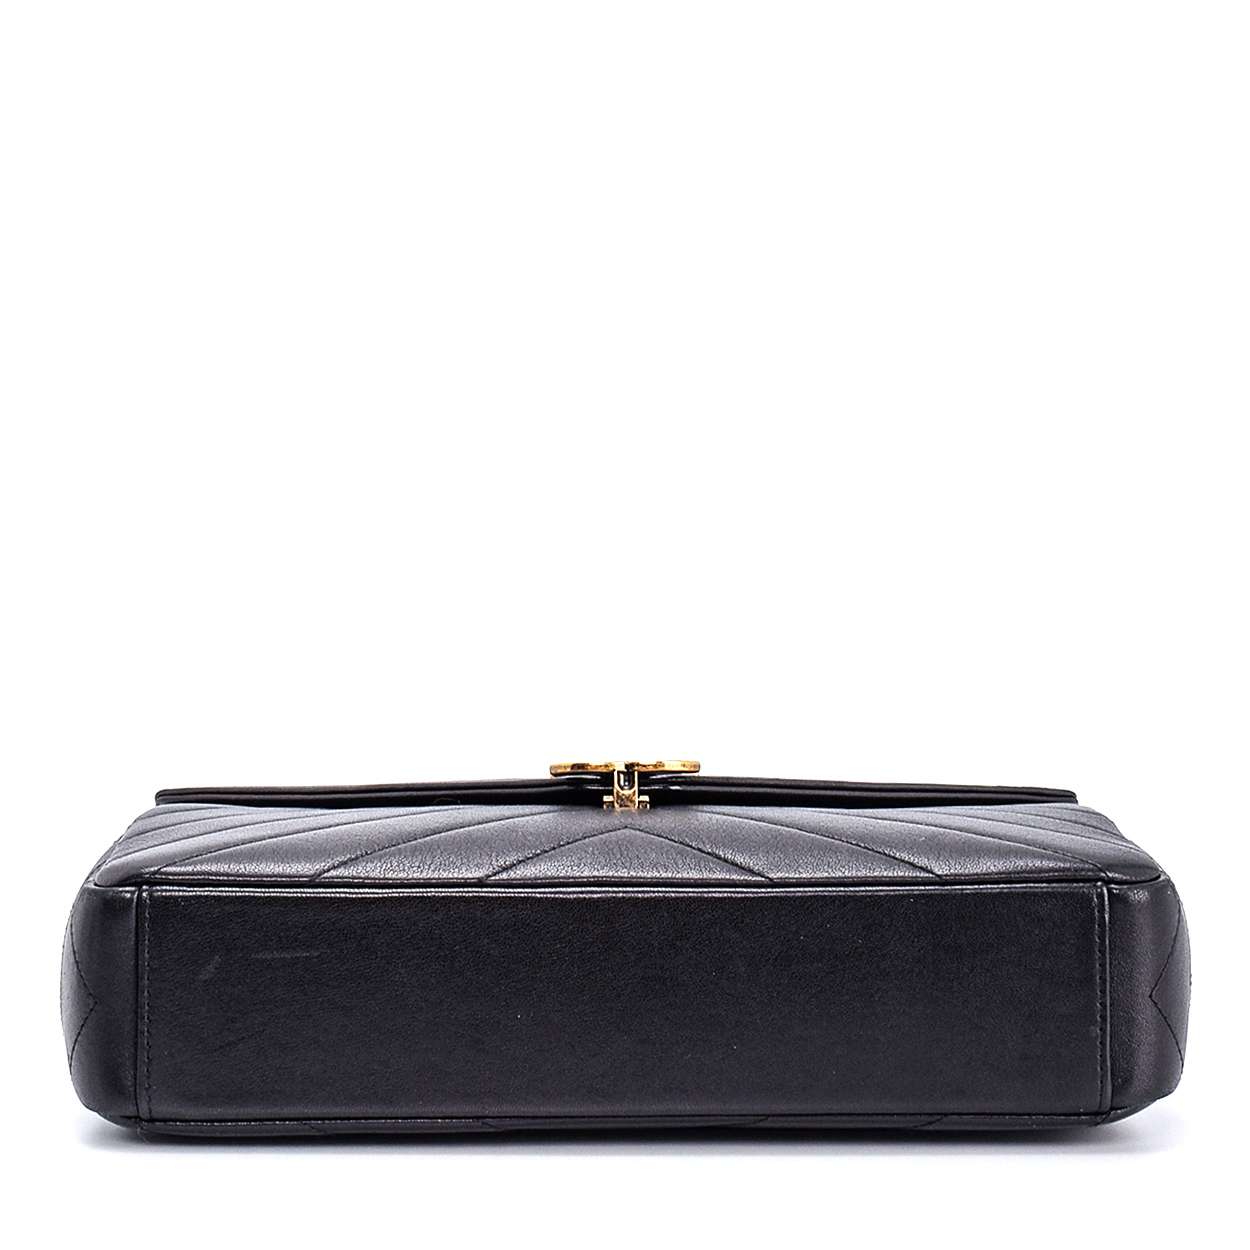 Chanel - Black Chevron Calfskin Flap Bag